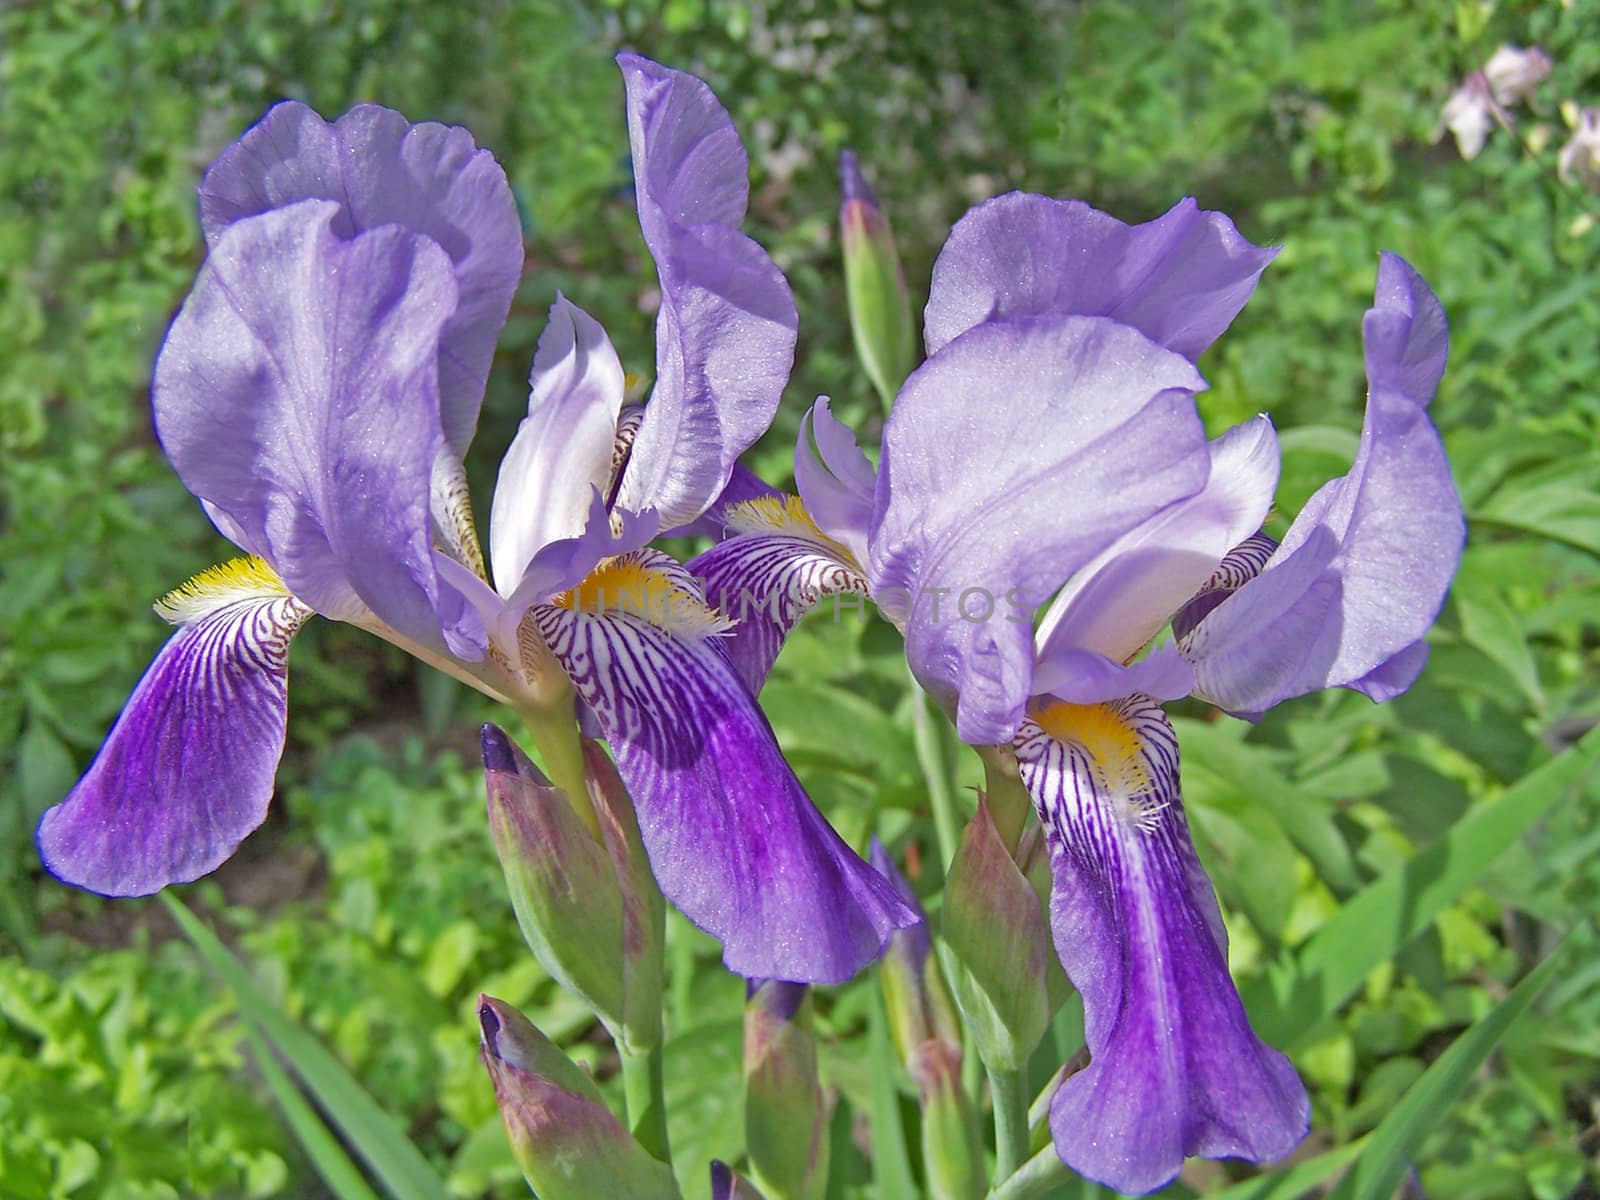 Two irises by Lessadar